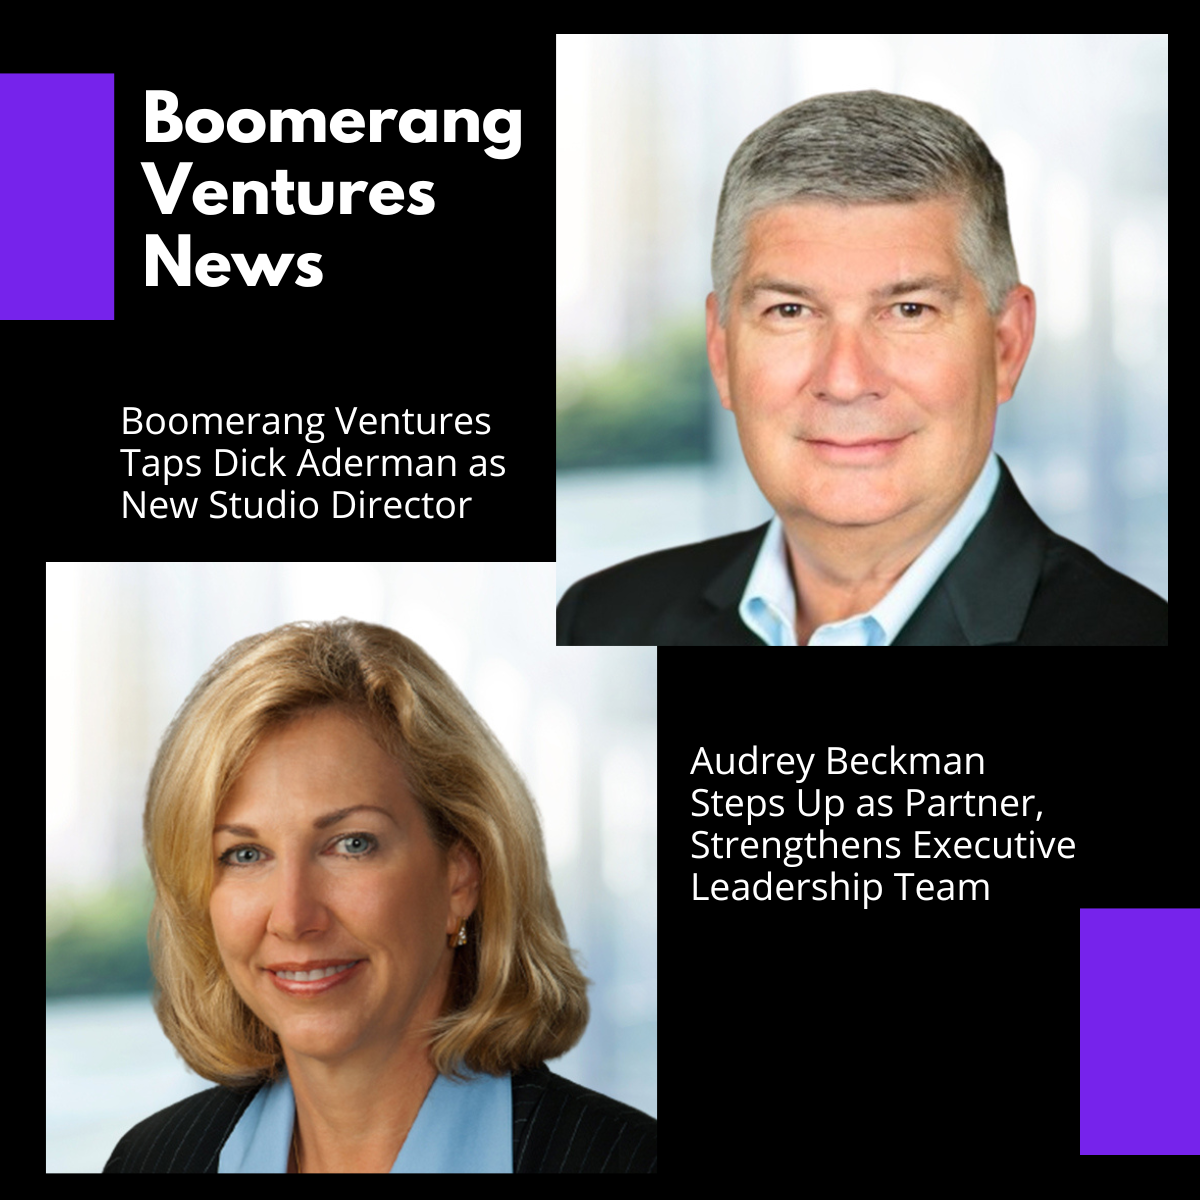 Boomerang Ventures Taps Dick Aderman as New Studio Director, Audrey Beckman Steps Up as Partner, Strengthens Executive Leadership Team